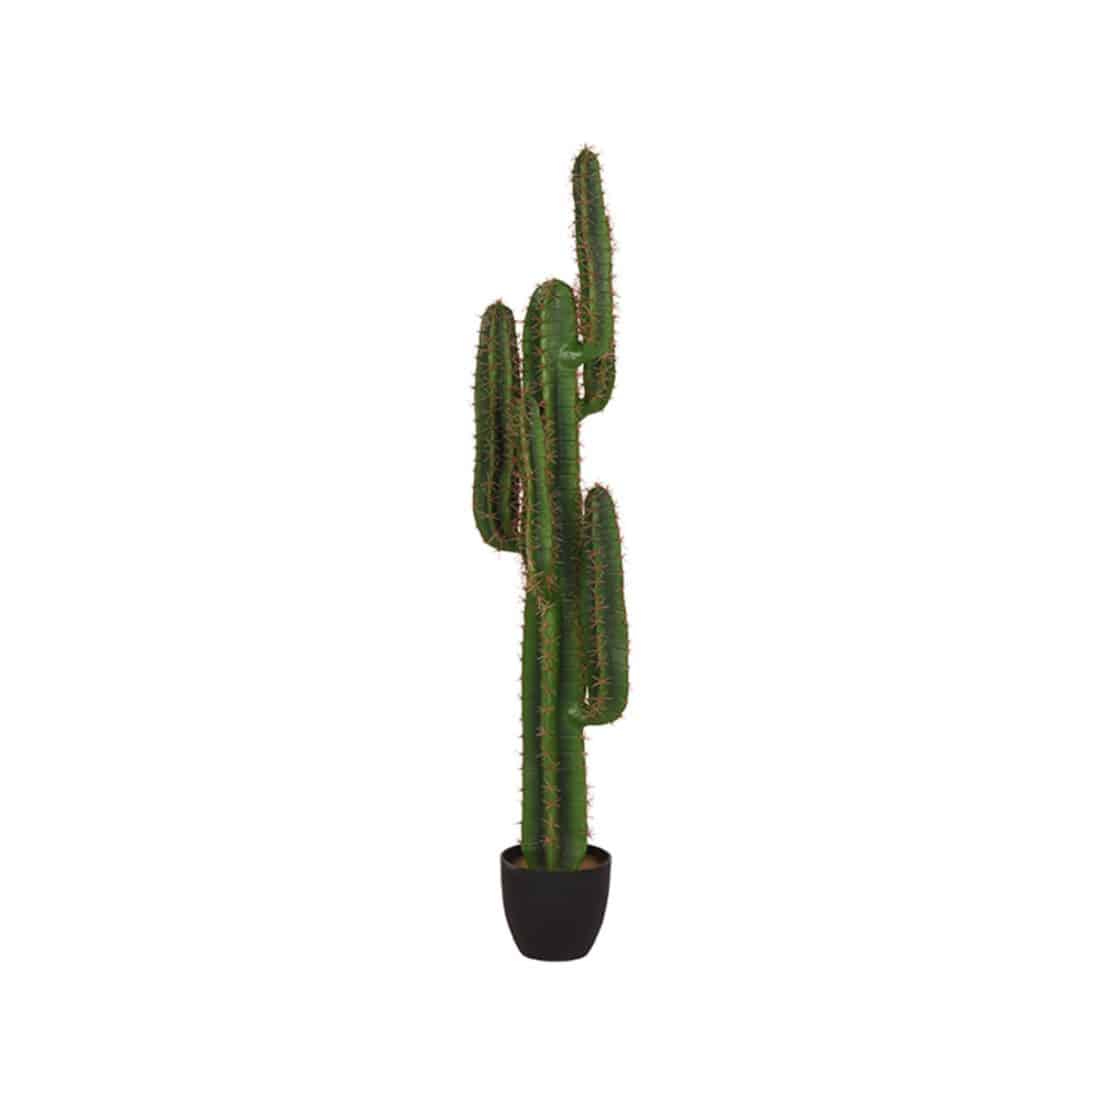 Cactus 8211 Groen 8211 Kunststof 8211 130 Cm 8211 Rhb Home Amp Living